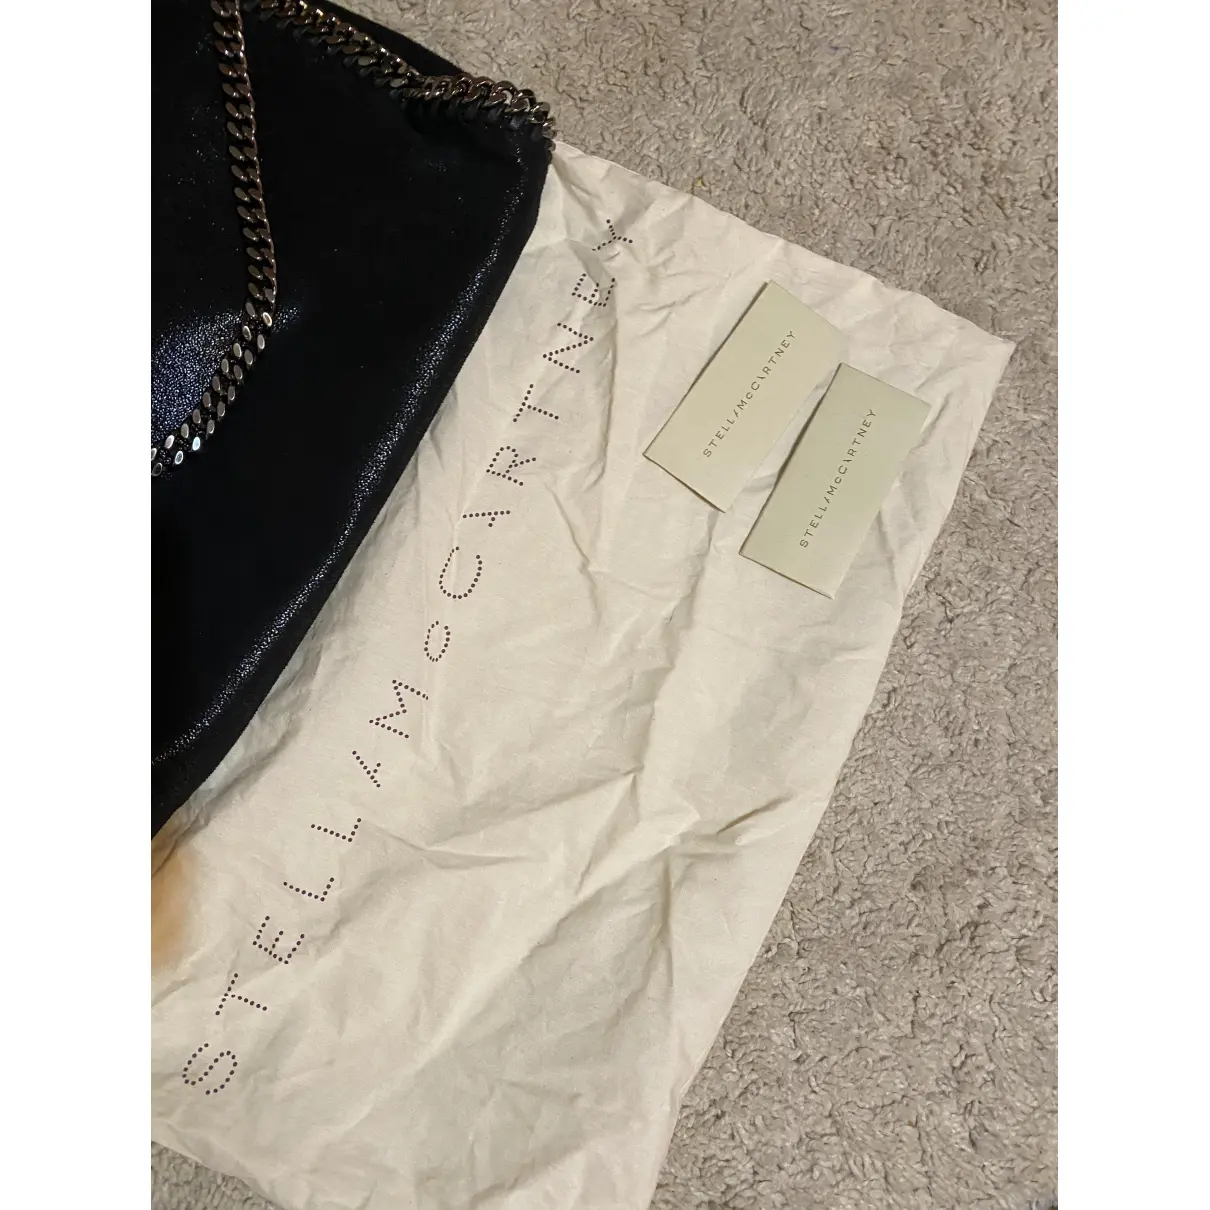 Buy Stella McCartney Falabella vegan leather bag online